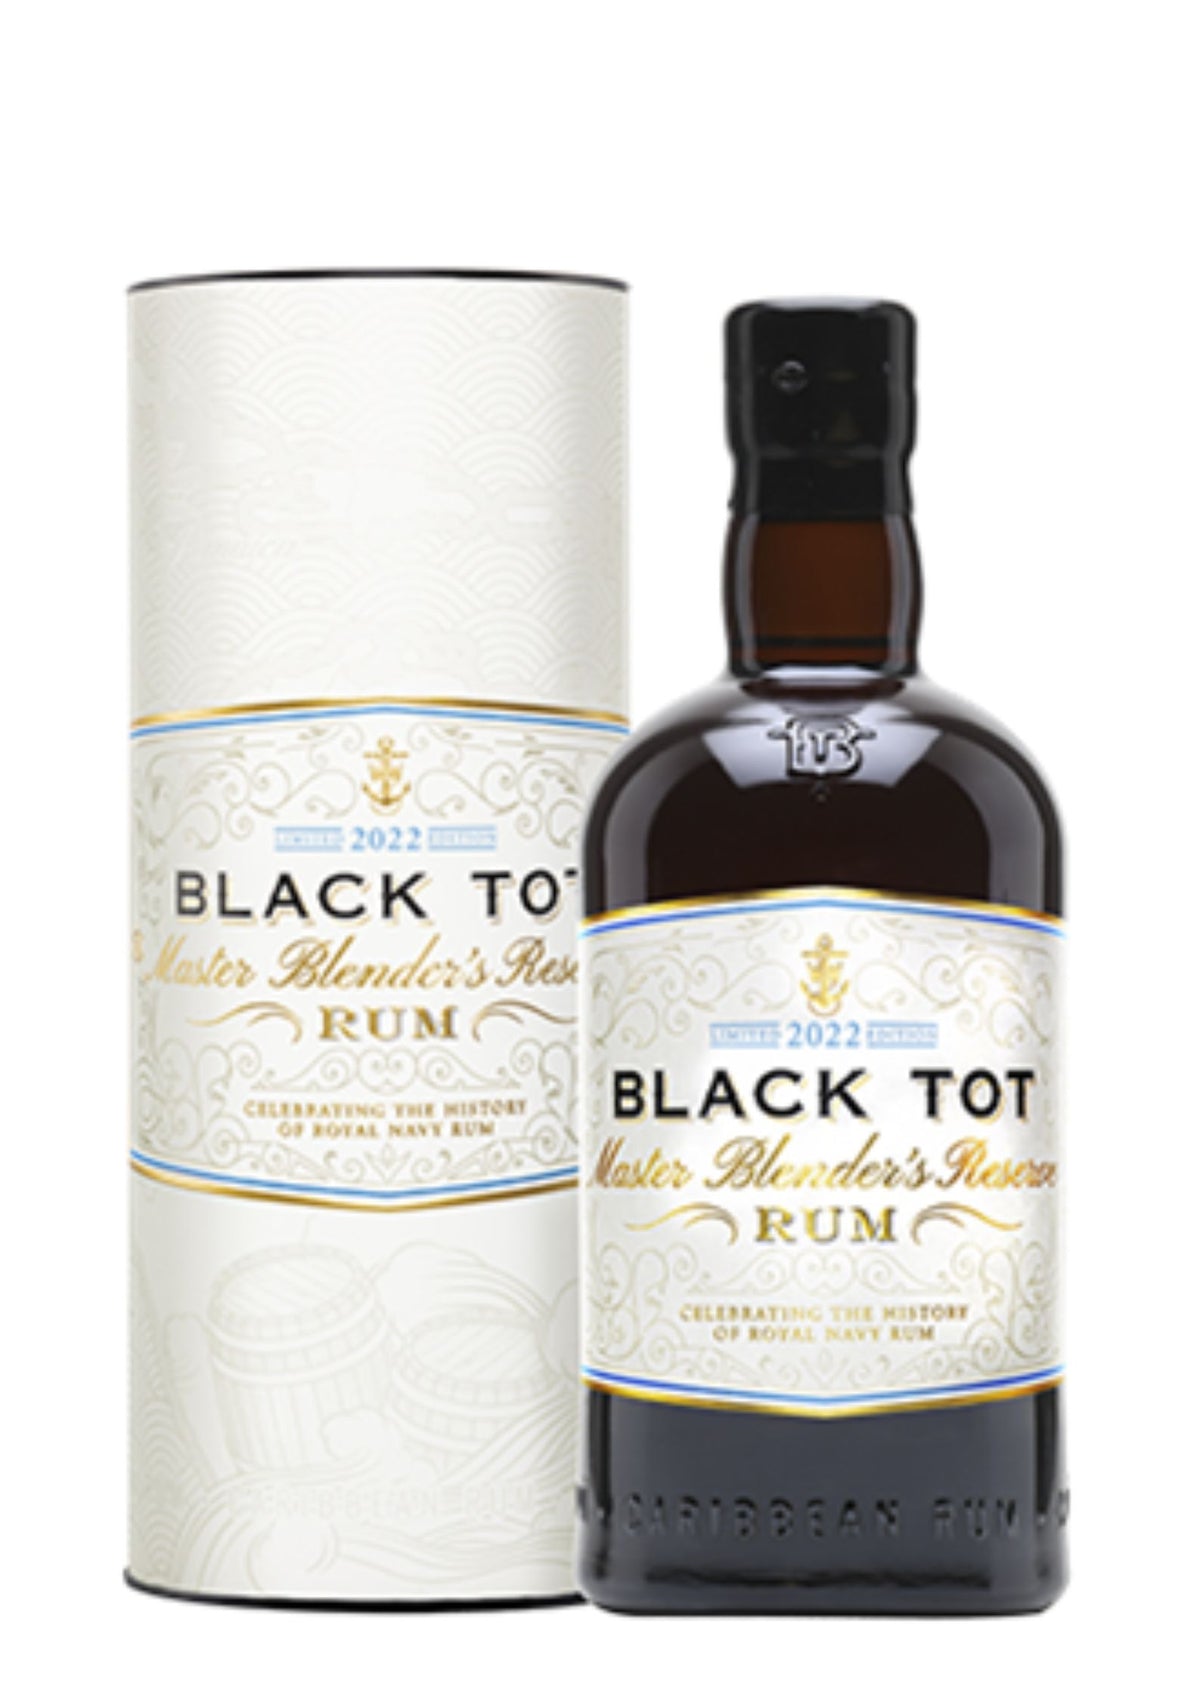 Black Tot Master Blenders Reserve 2022 Limited Edition Rum, 54.5%